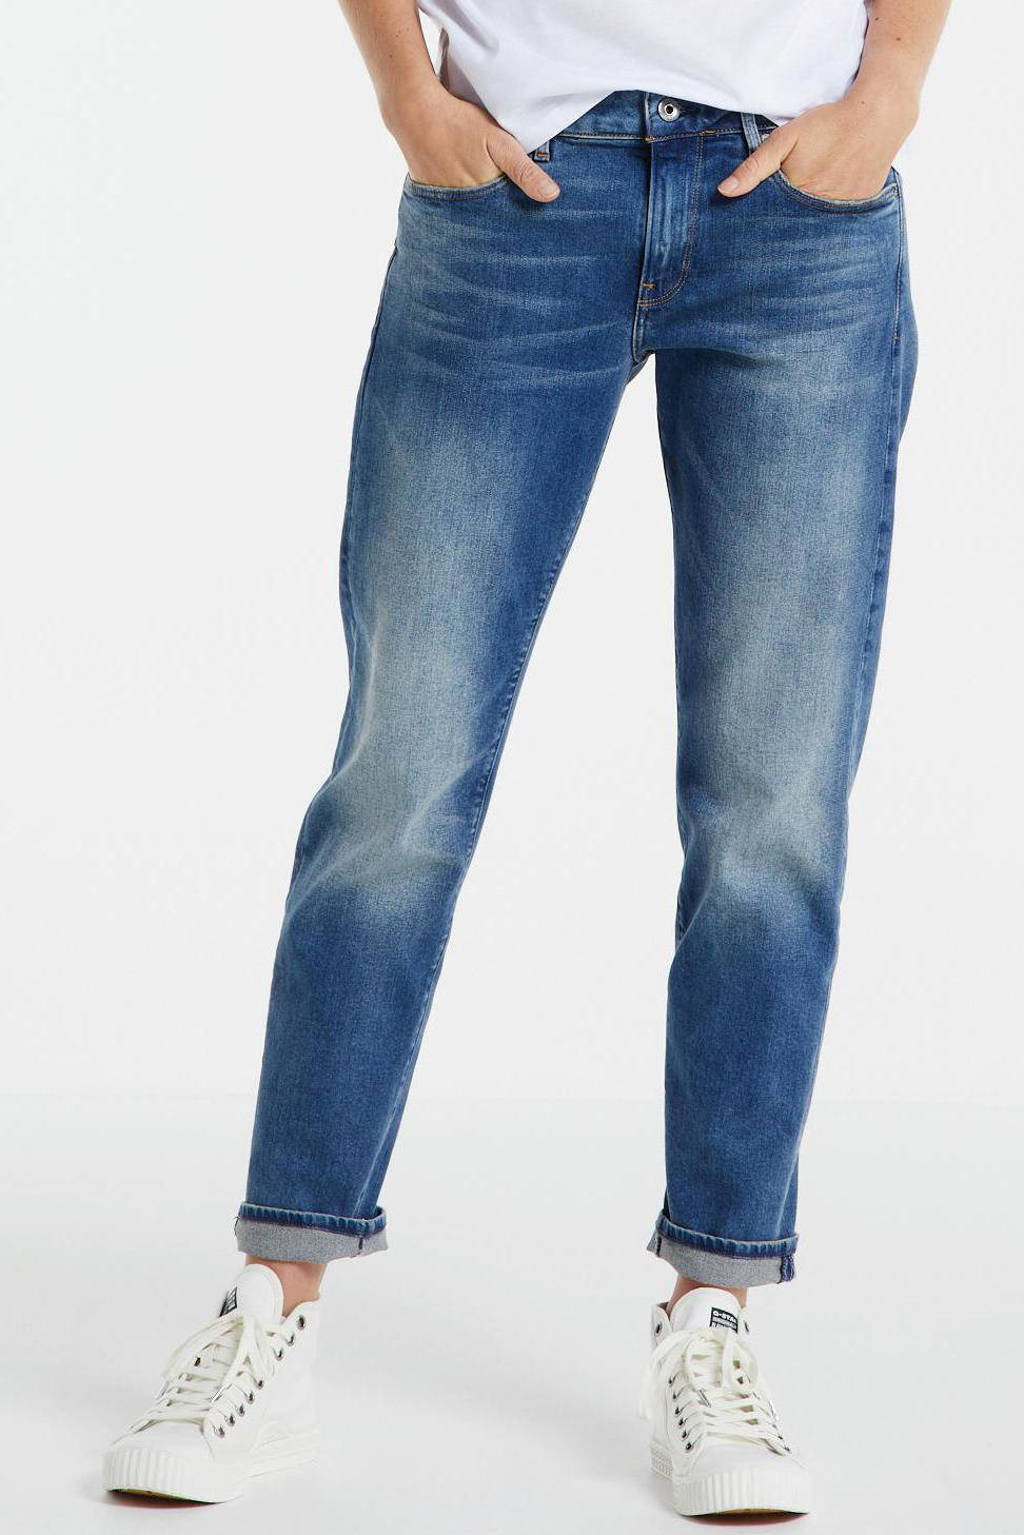 borduurwerk verontschuldiging buitenspiegel G-Star RAW Kate boyfriend jeans vintage azure | wehkamp